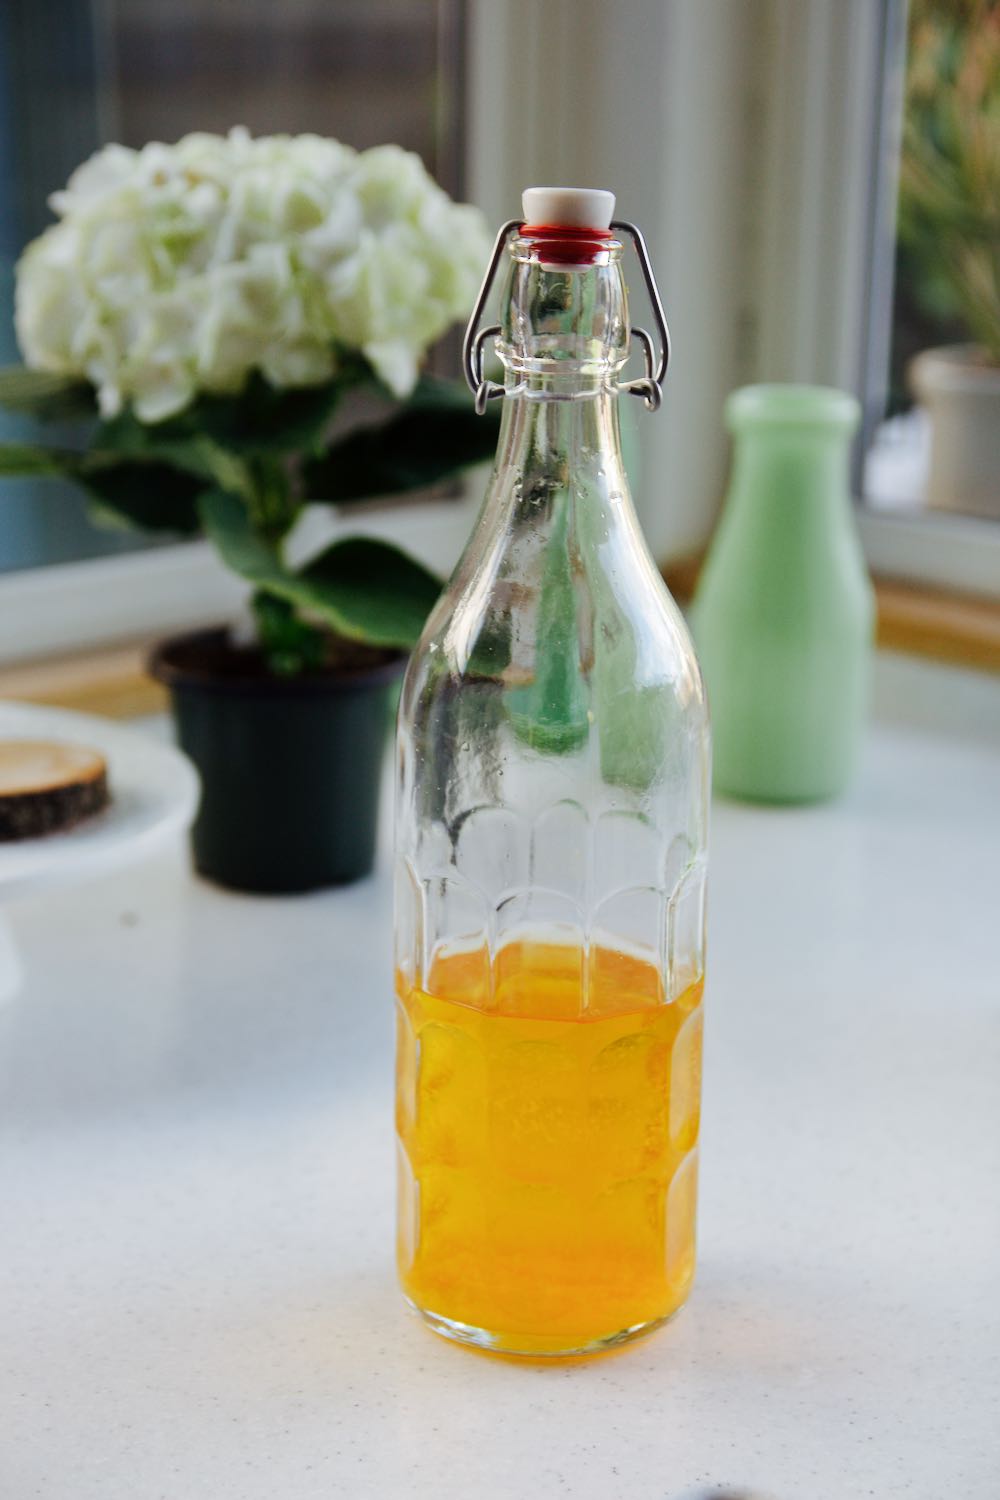 How to make orange-infused vodka